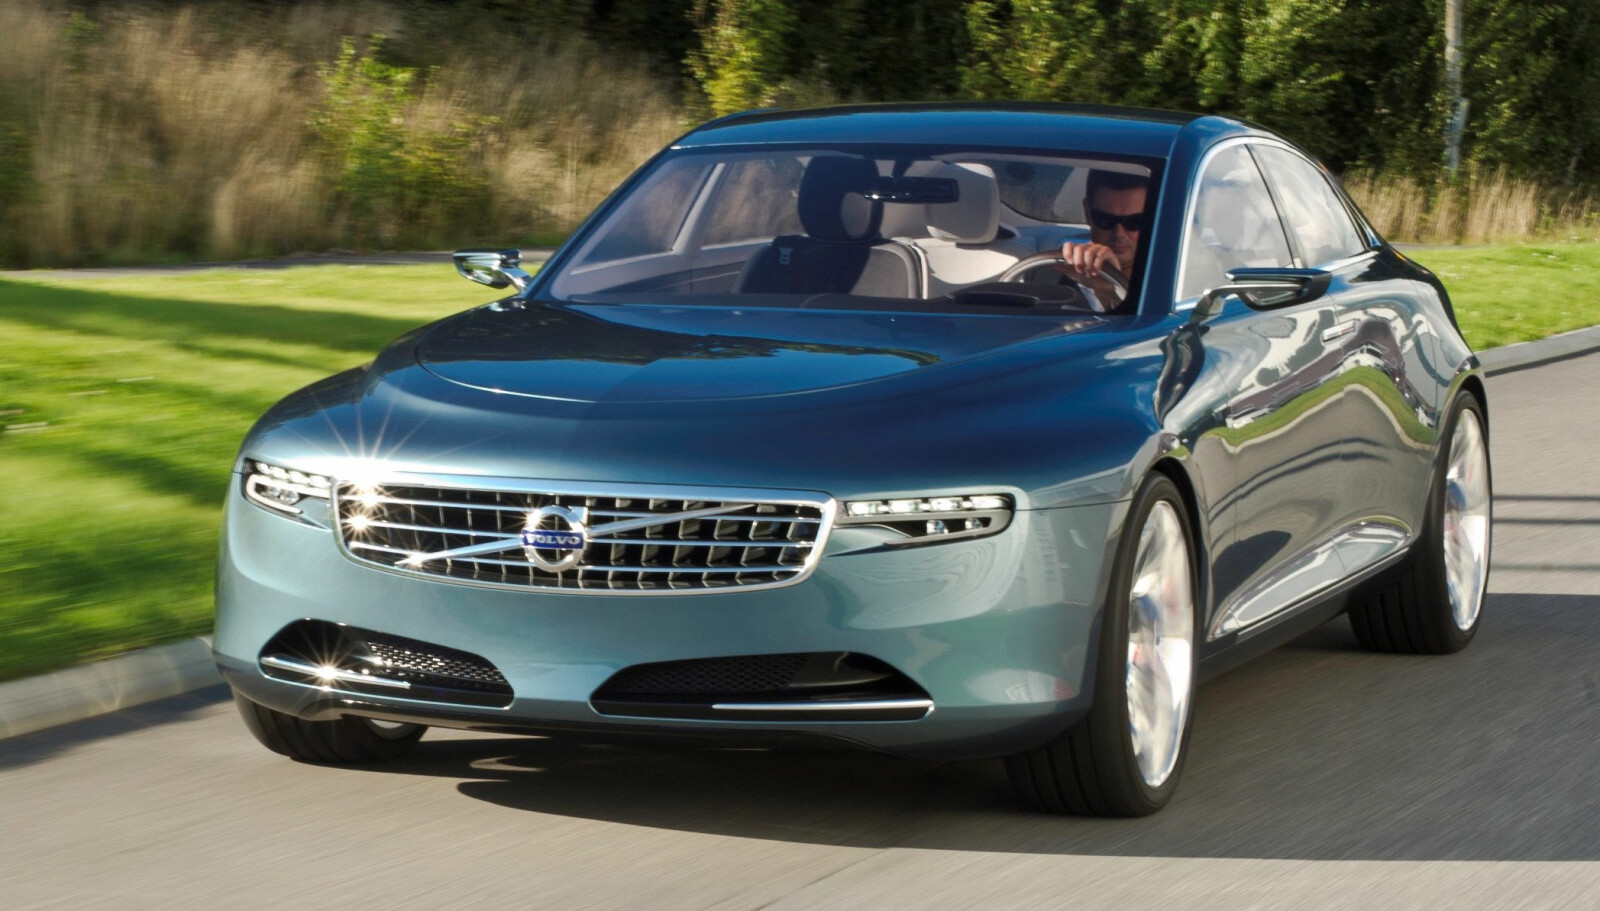 <b>LUKSUS:</b> Volvo Concept You fra 2011 var en luksuriøs og påkostet modell som skulle konkurrere med Mercedes S-klasse og BMW 7-serie.